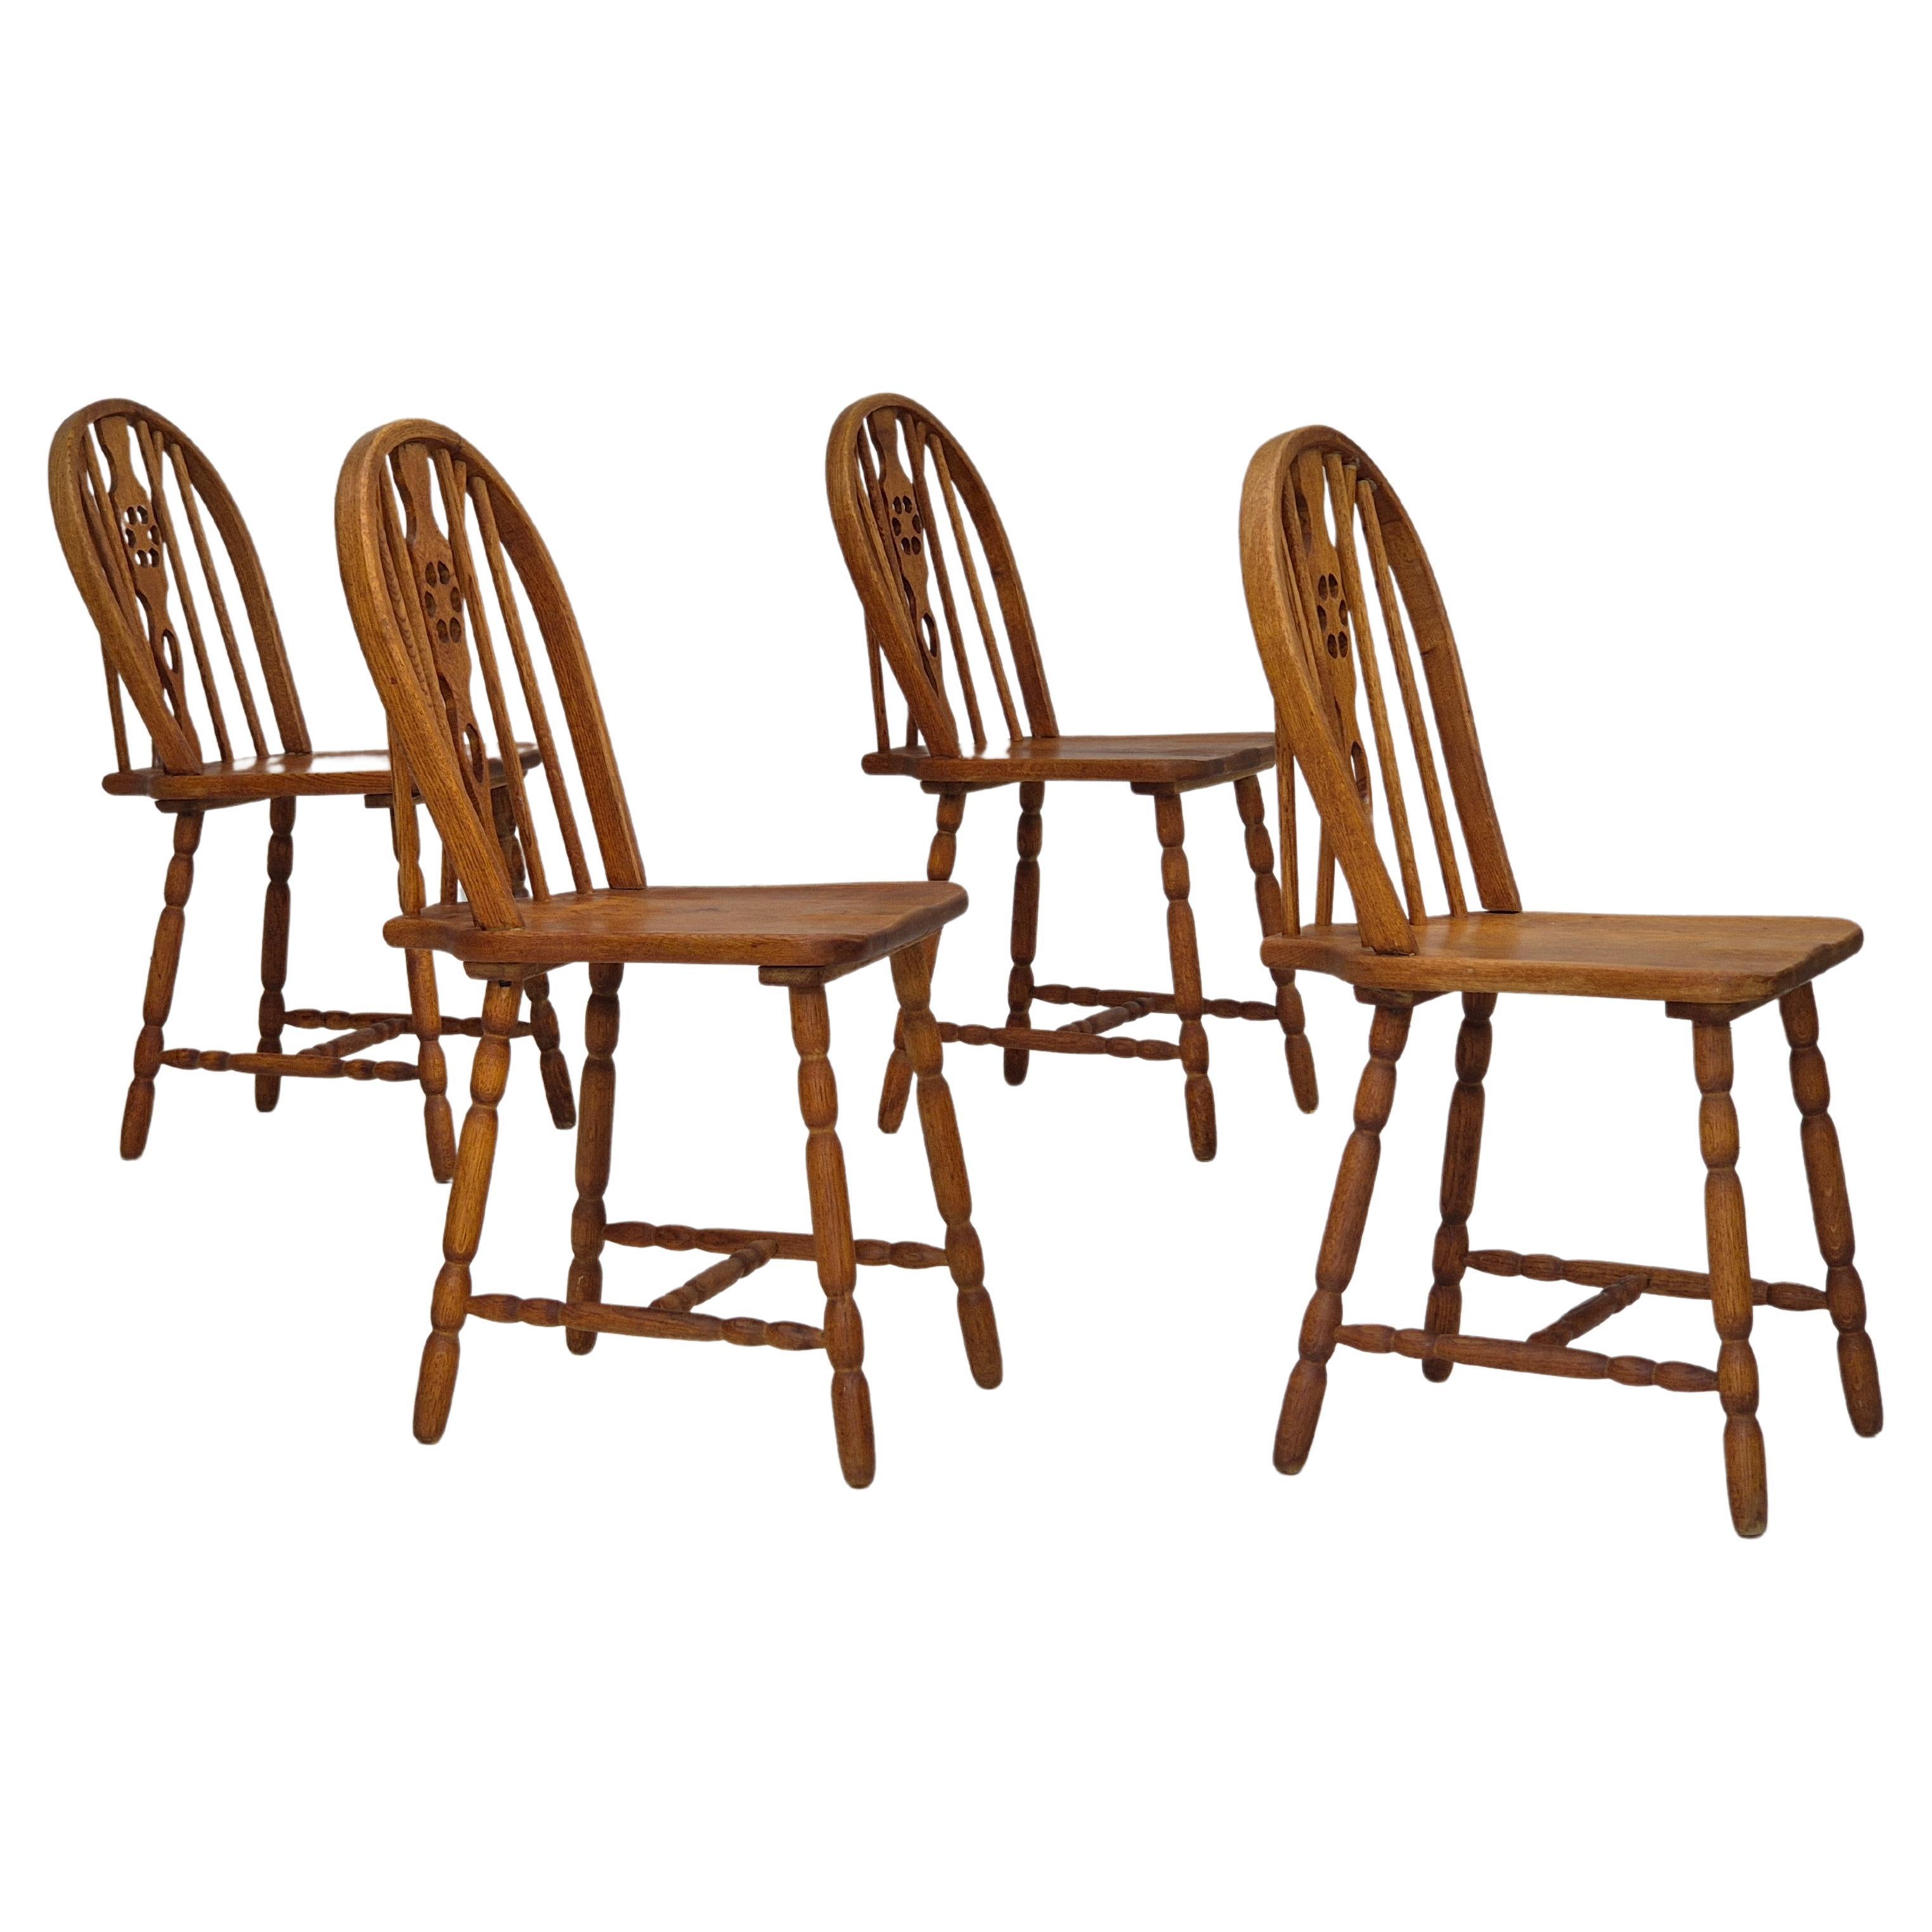 1960s, set of 4 scandinavian dining chairs in solid oak wood, original.